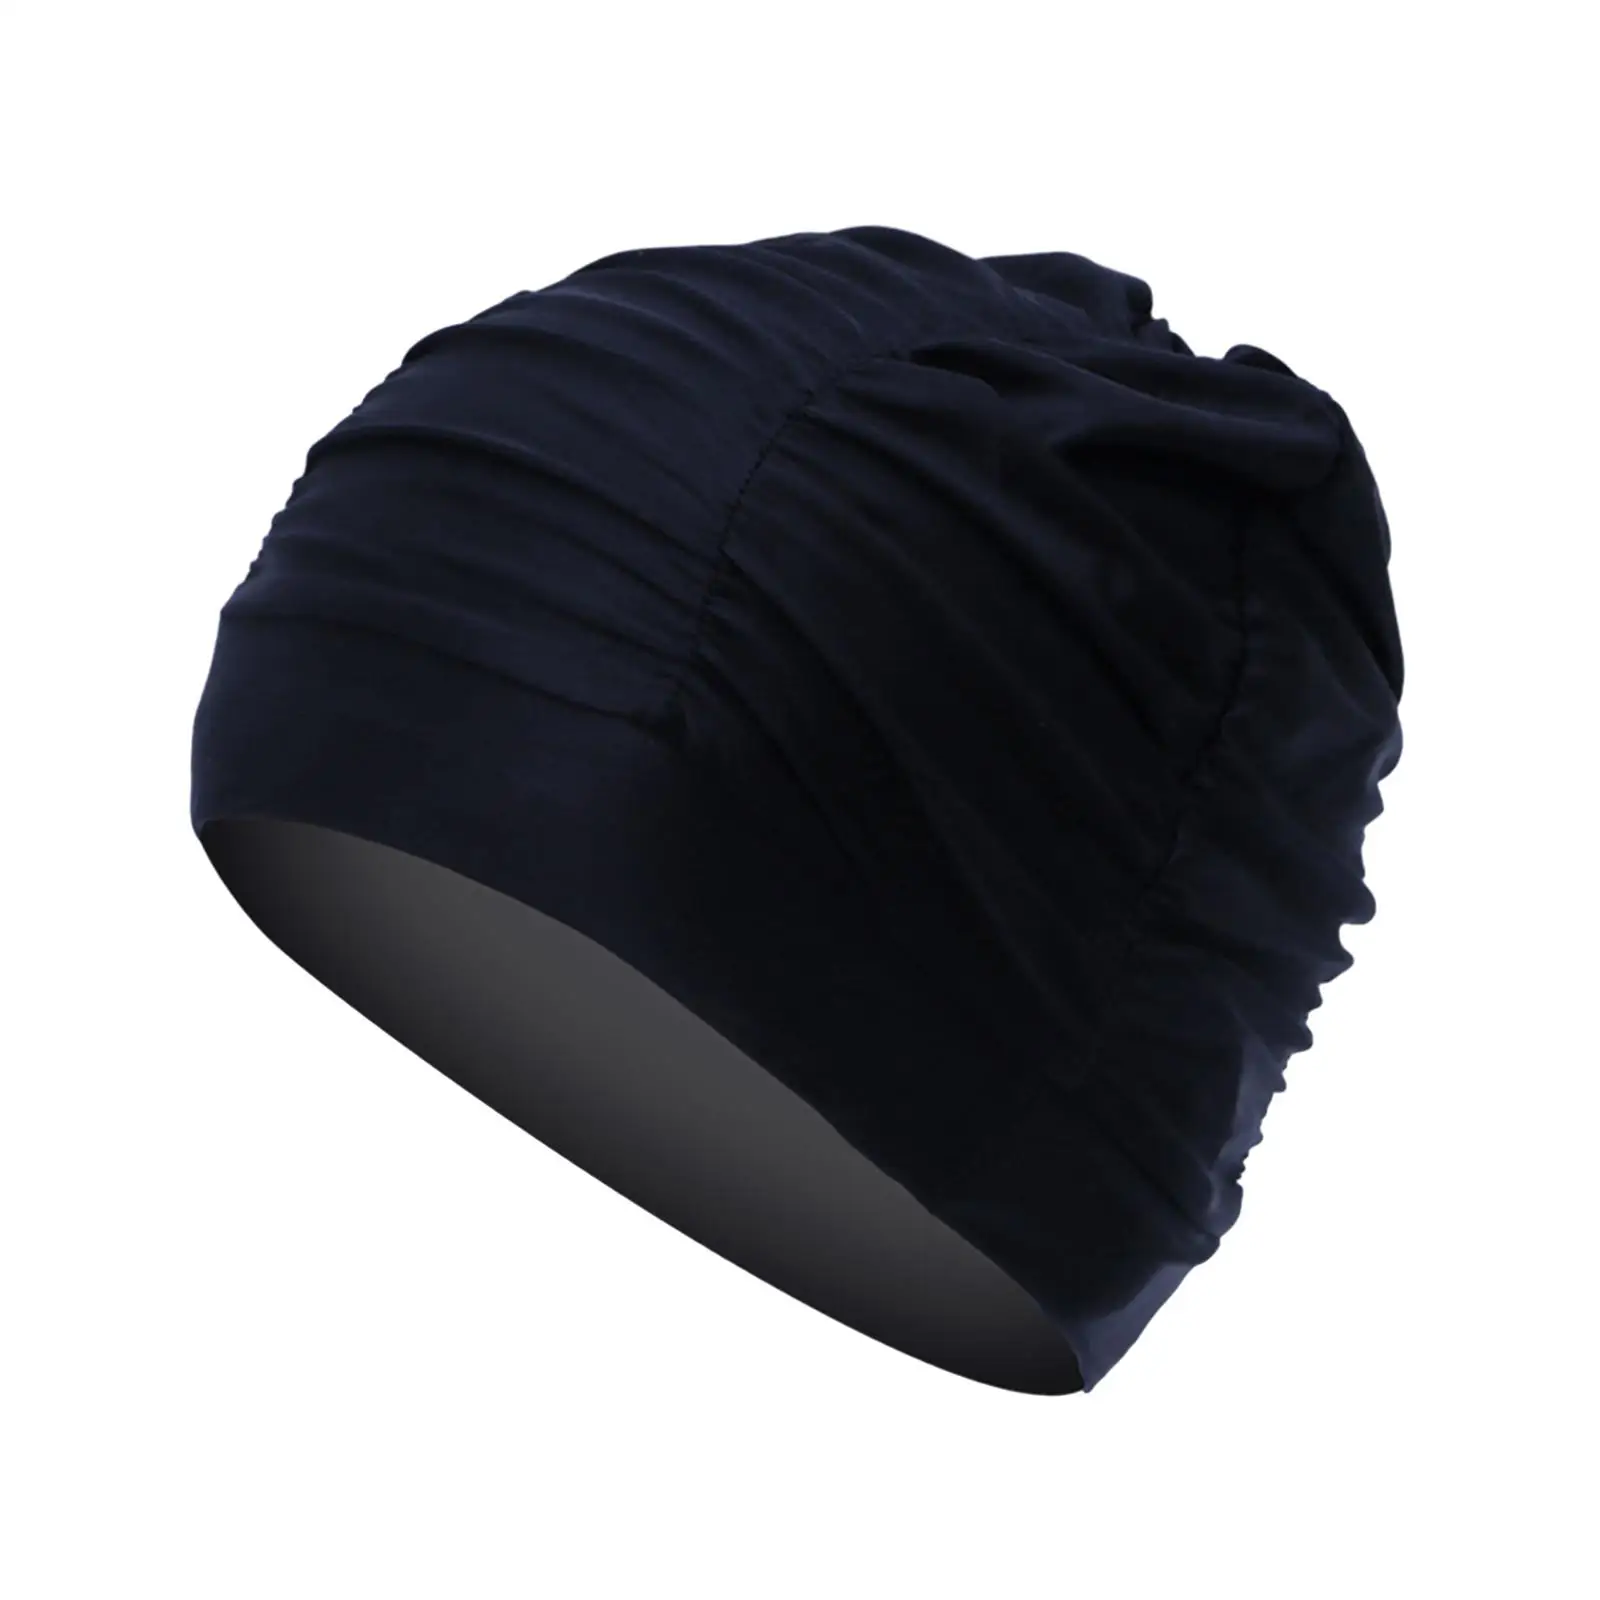 Swimming Hat Fashion Nylon Durable Comfortable Fashion Diving Cap Premium Swimming Accessories Swim Cap for Long Hair Men Women